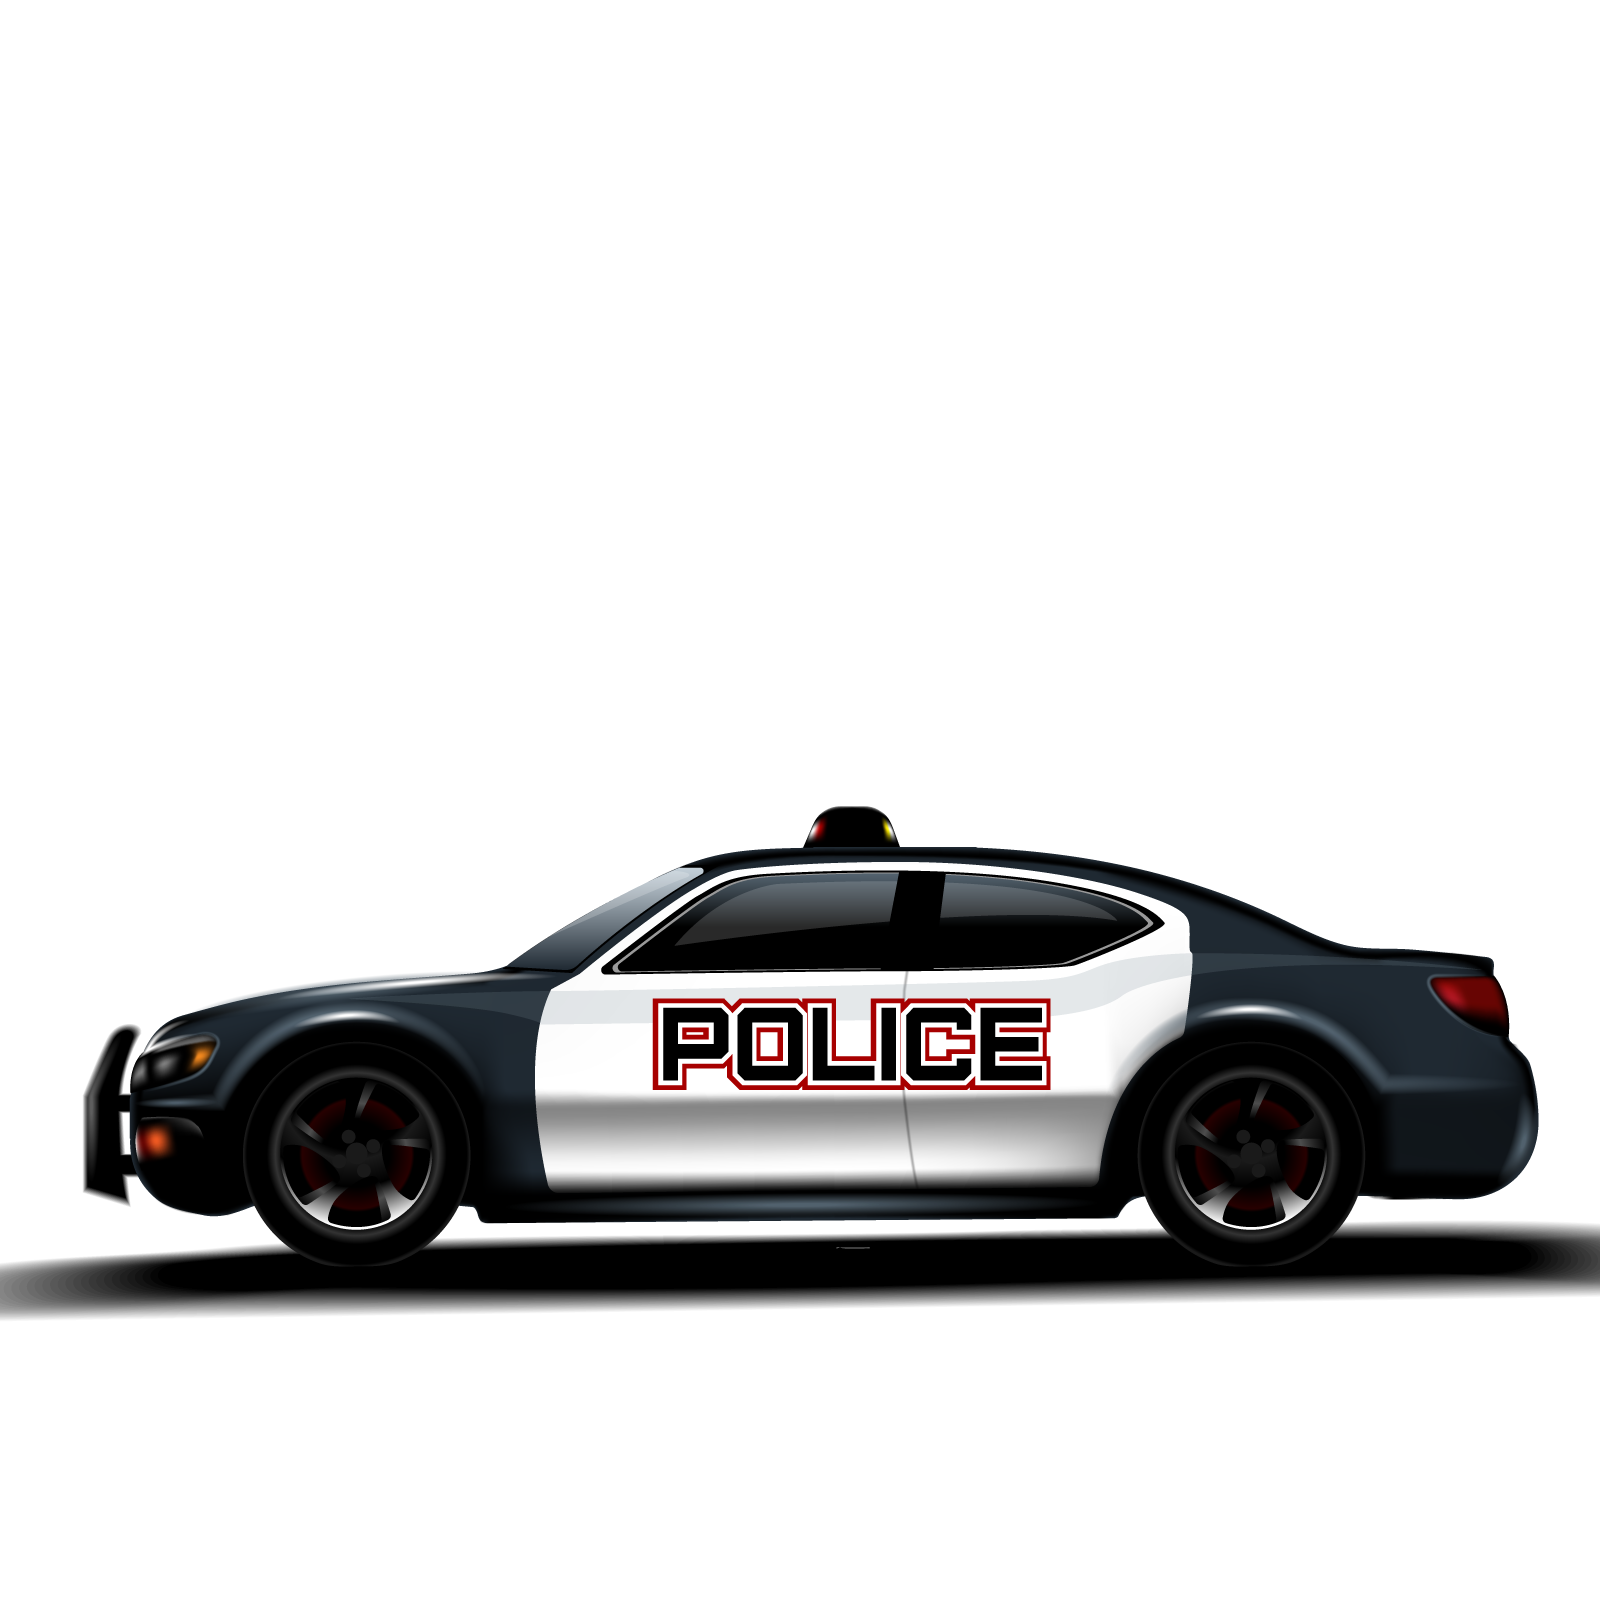 Police Car PNG HD Free File Download